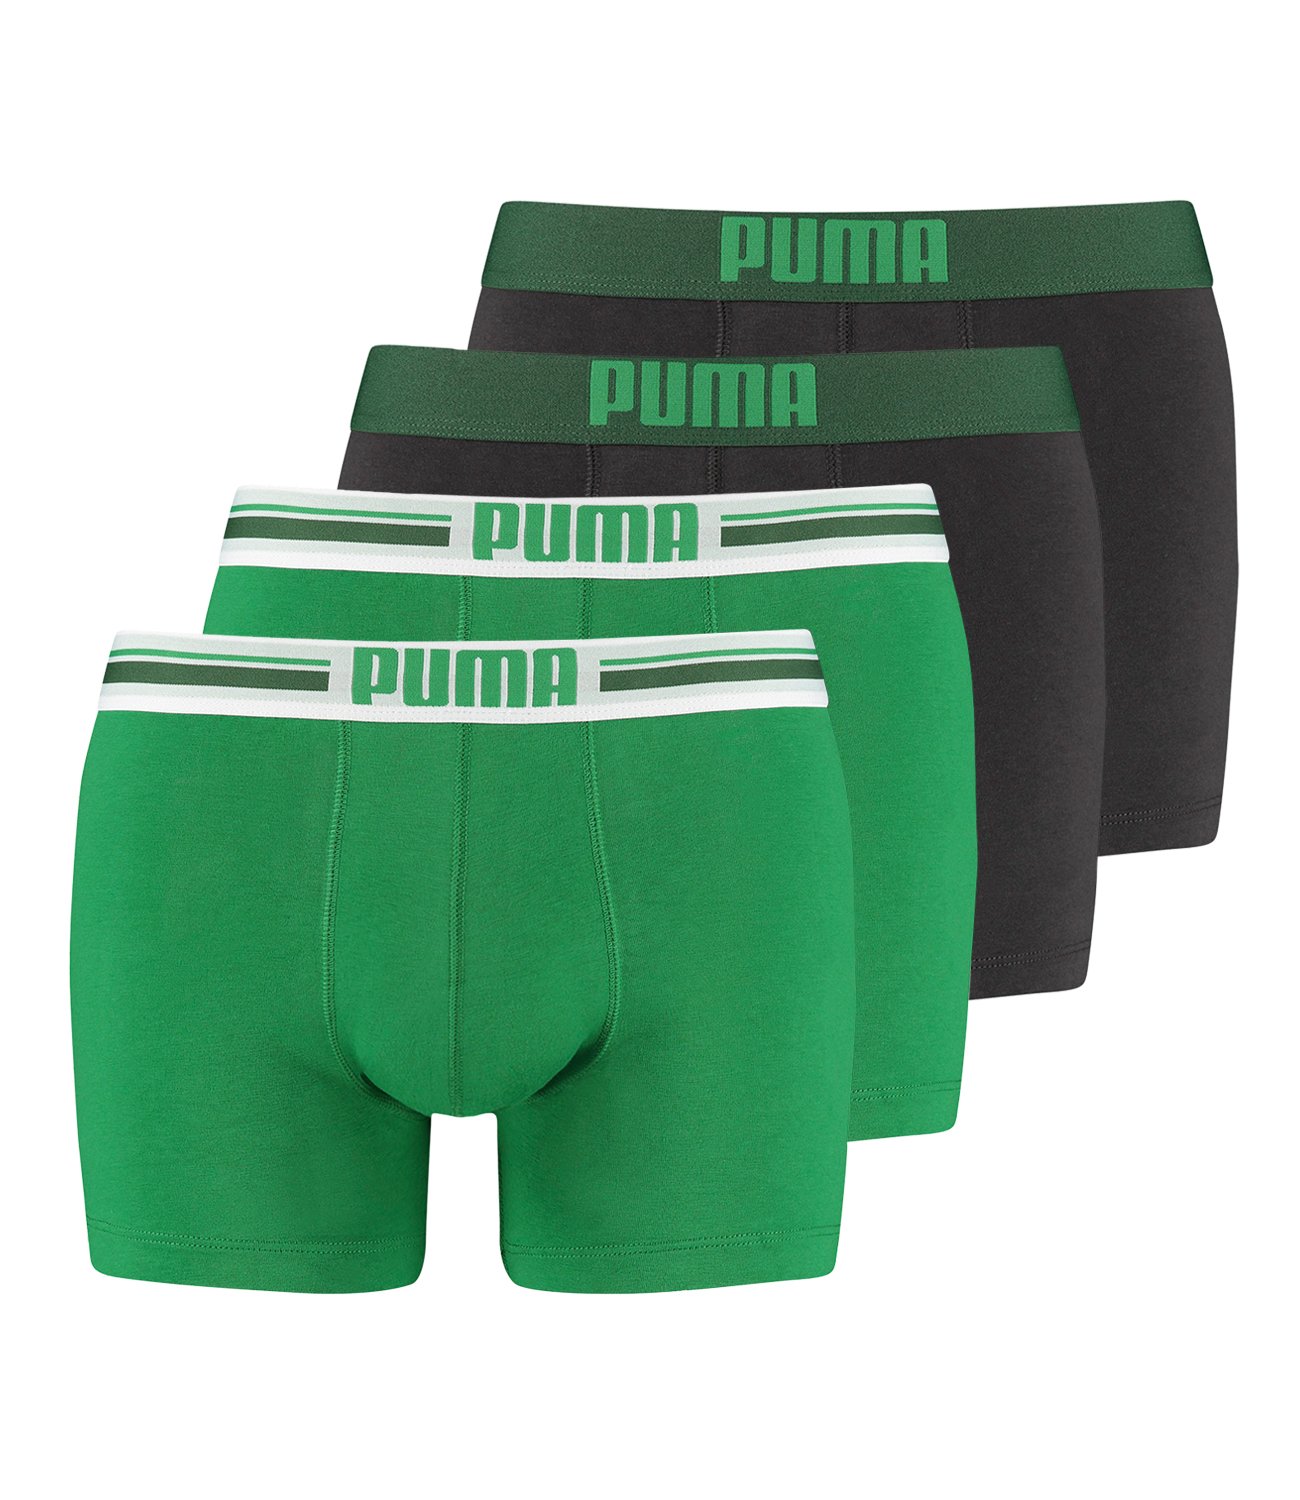 PUMA Herren Boxershorts Unterhosen Placed Logo Boxer 651003001 4er Pack, Farbe:Grün, Menge:4er Pack (2X 2er), Wäschegröße:XL, Artikel:-327 Green